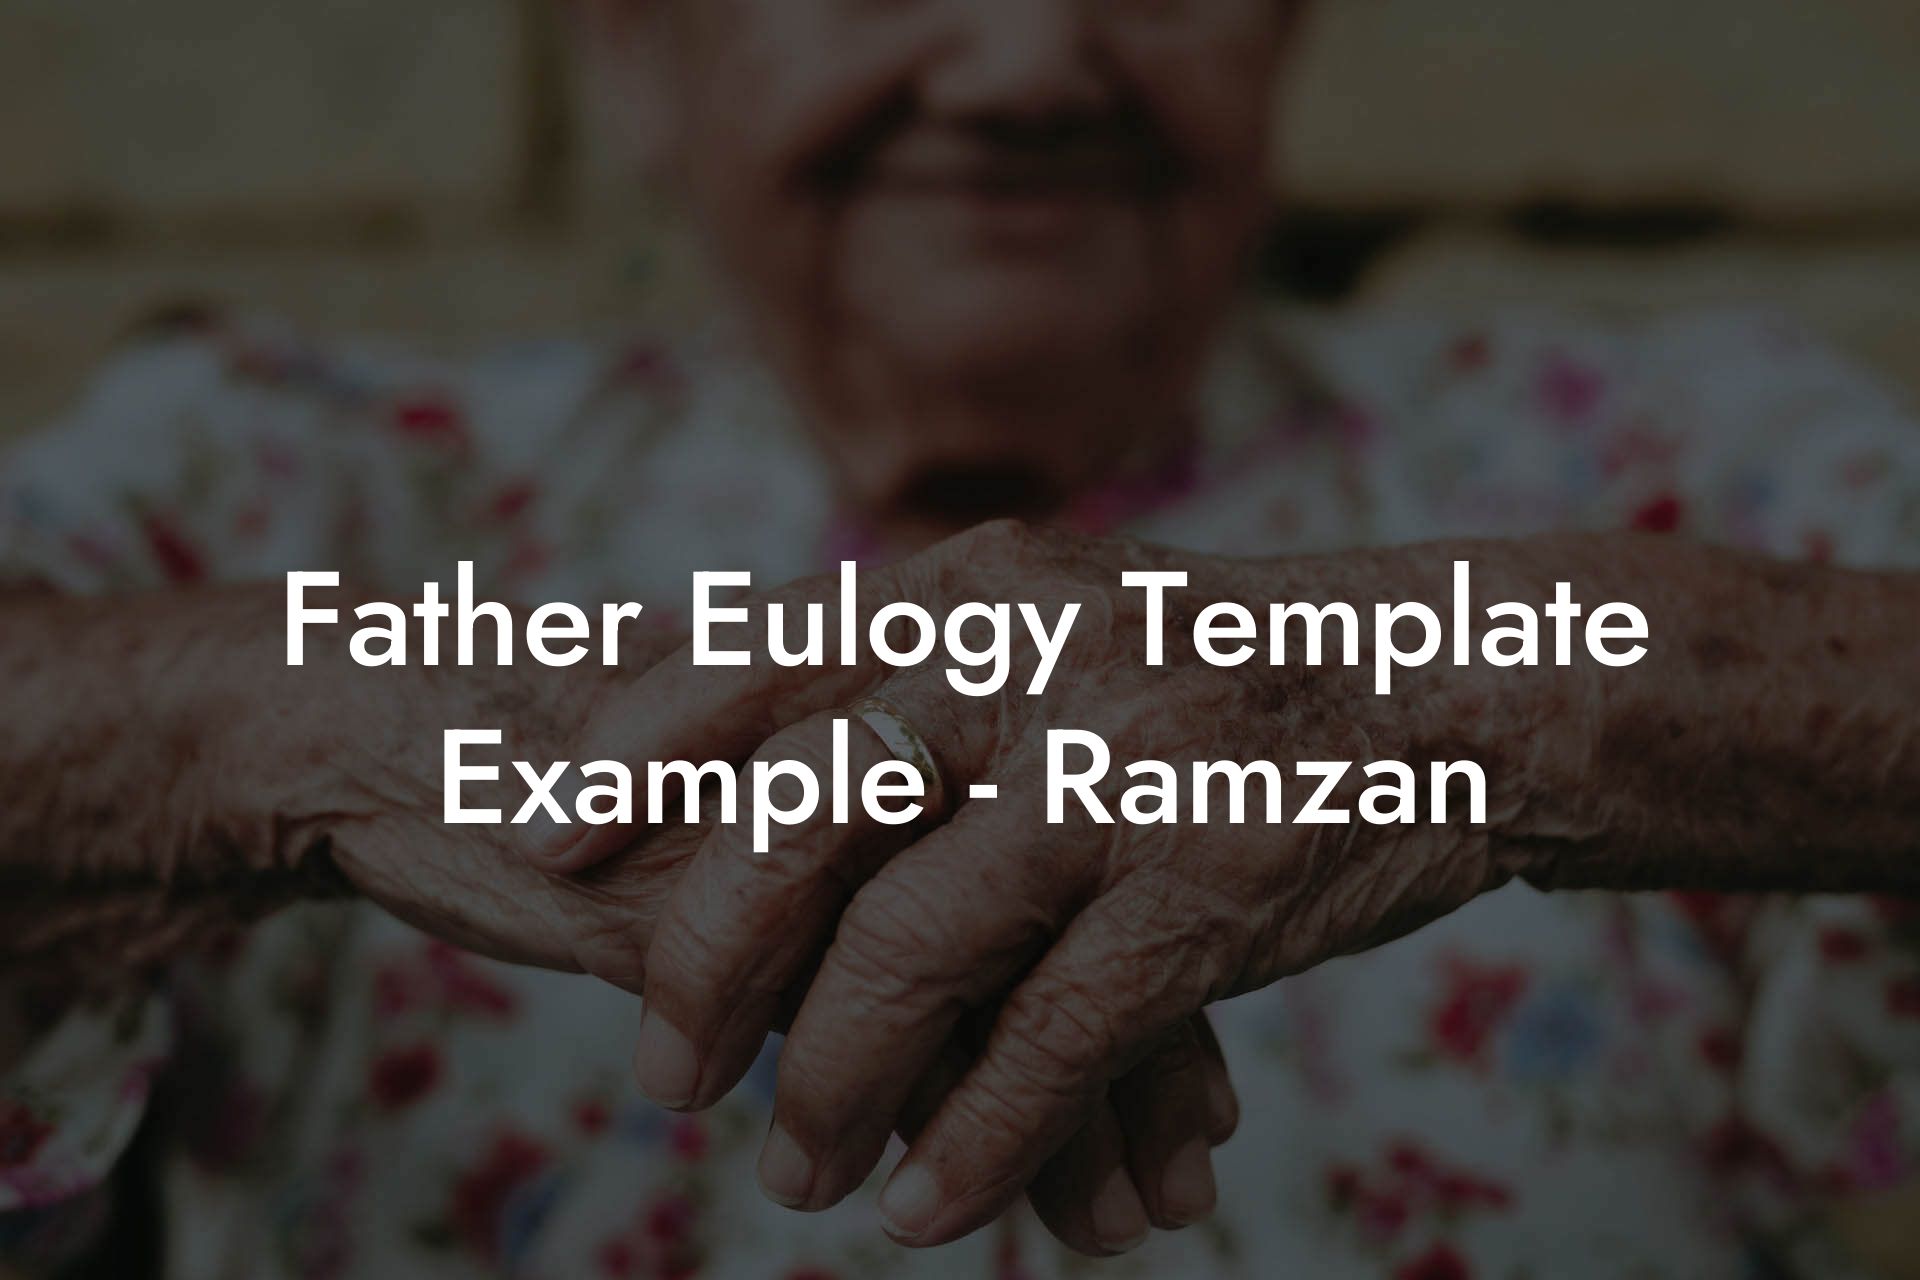 Father Eulogy Template Example - Ramzan